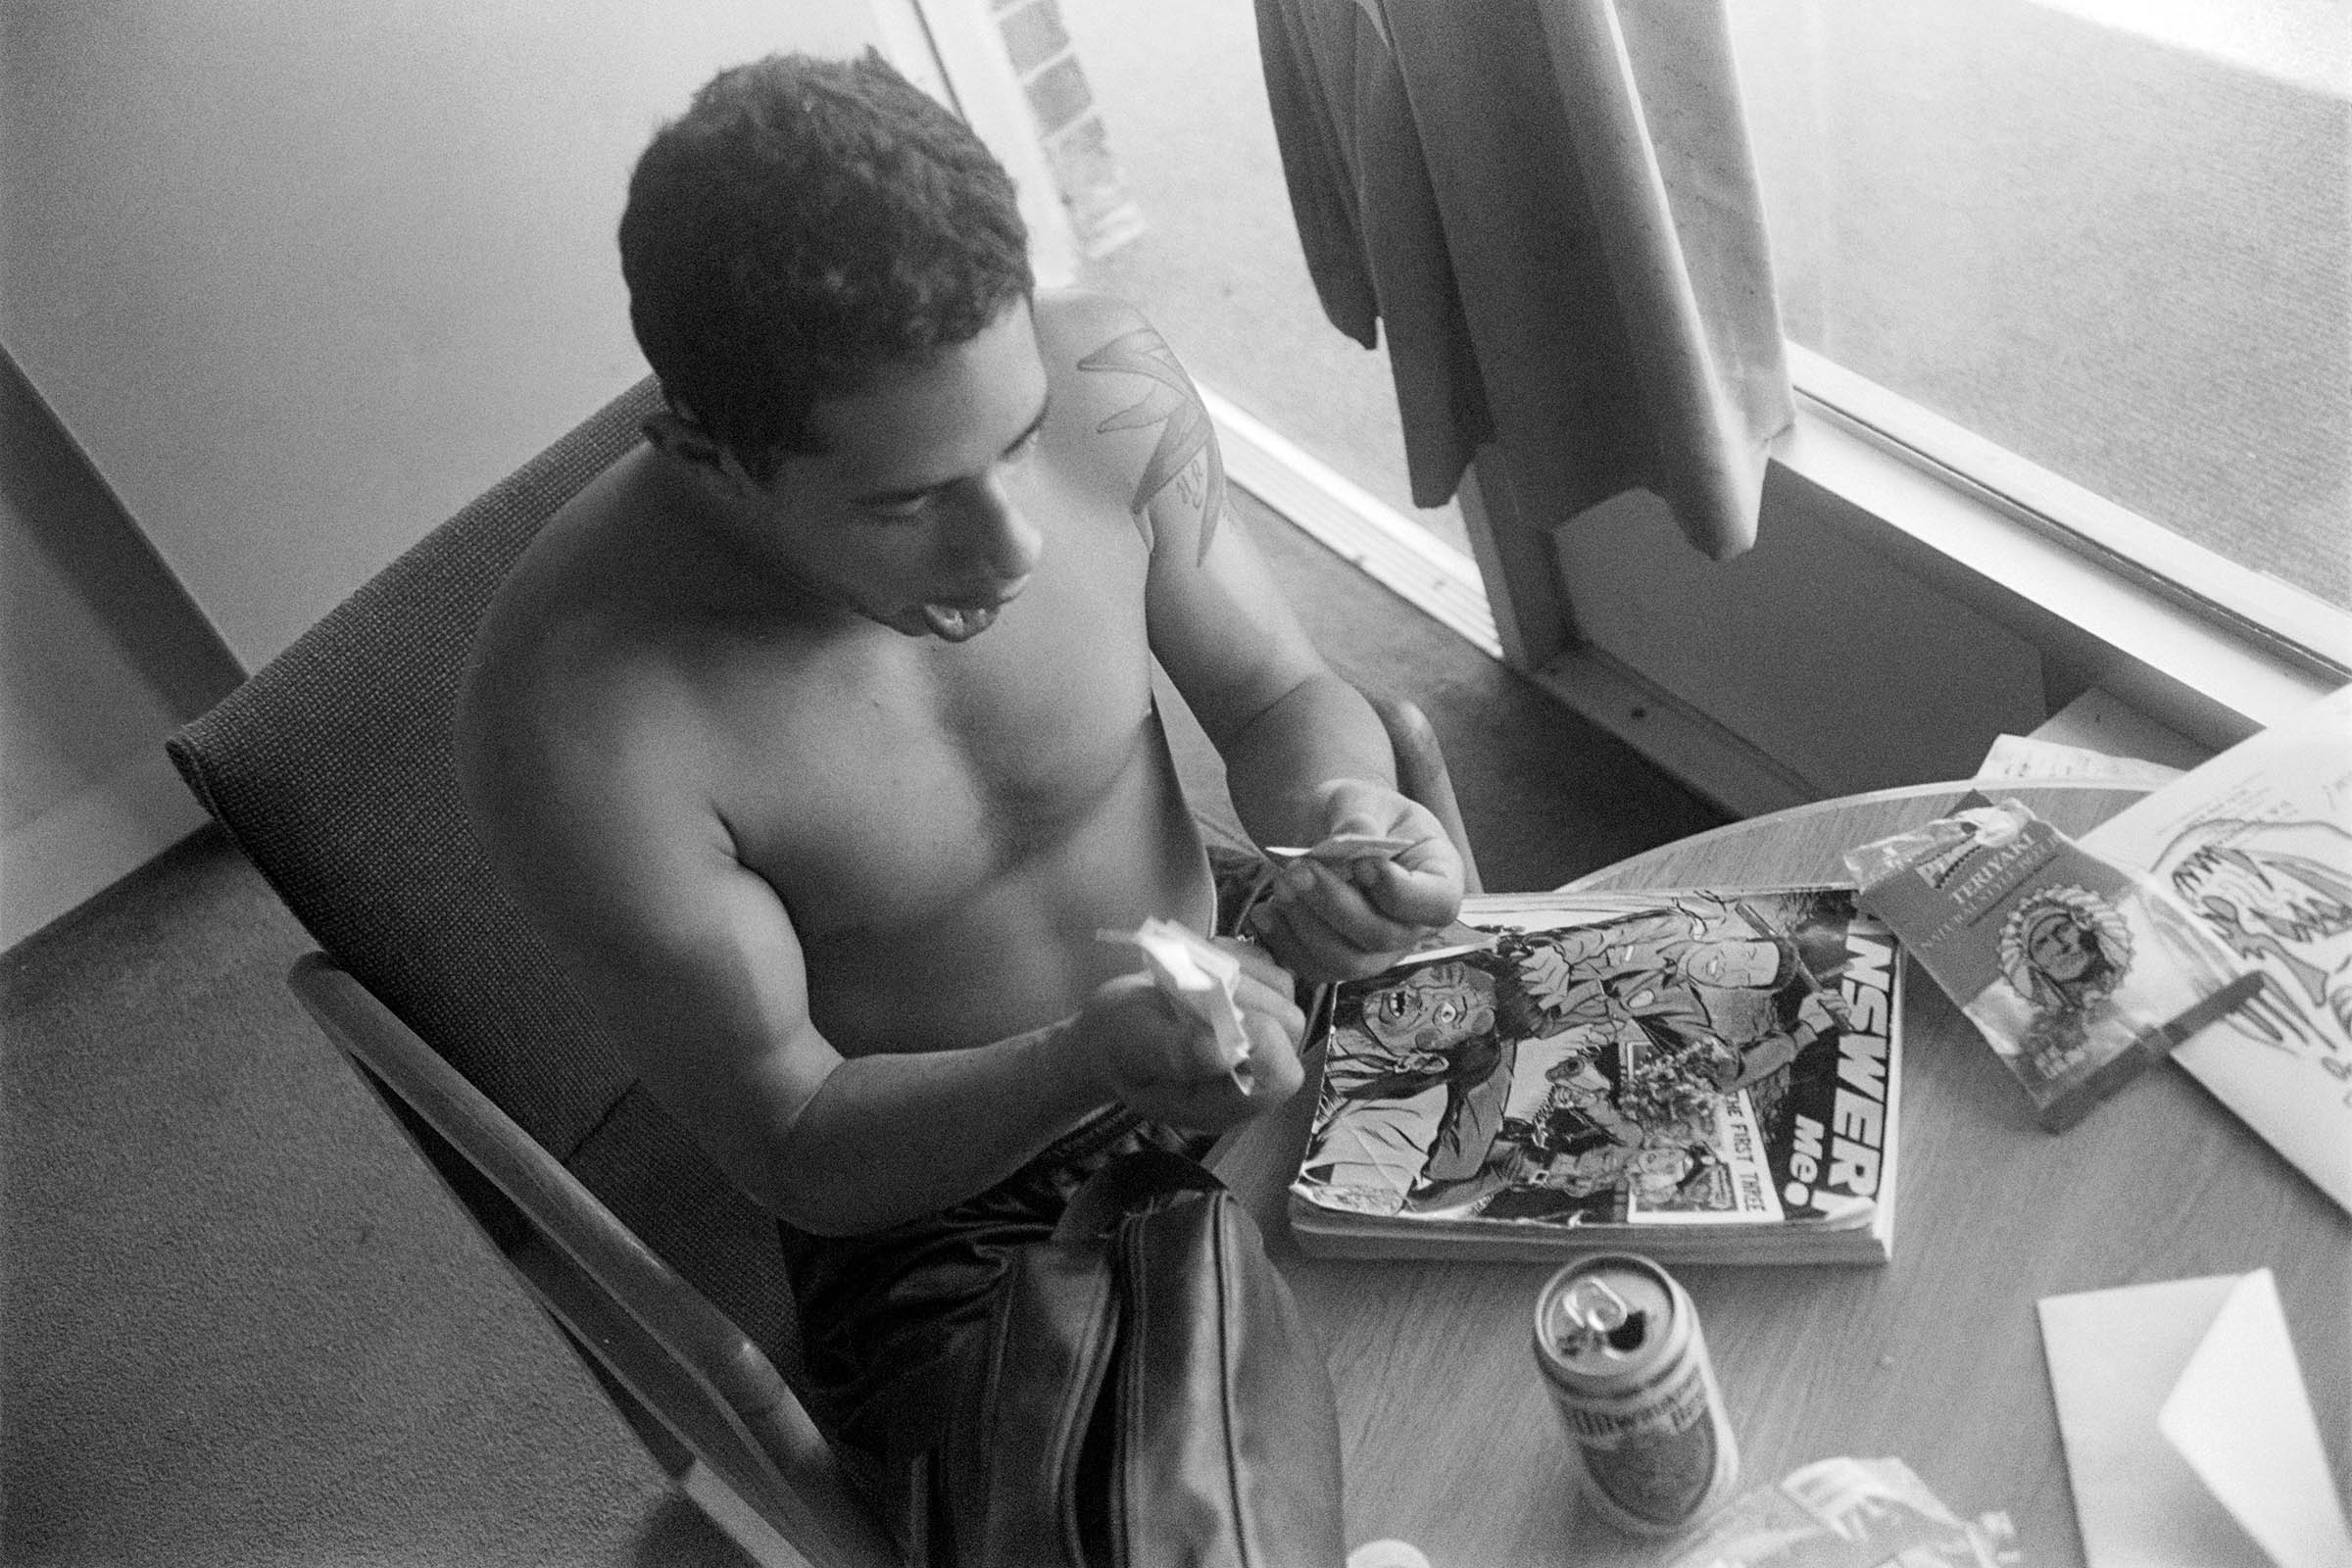 a topless man holding smoking paraphernalia over a book 